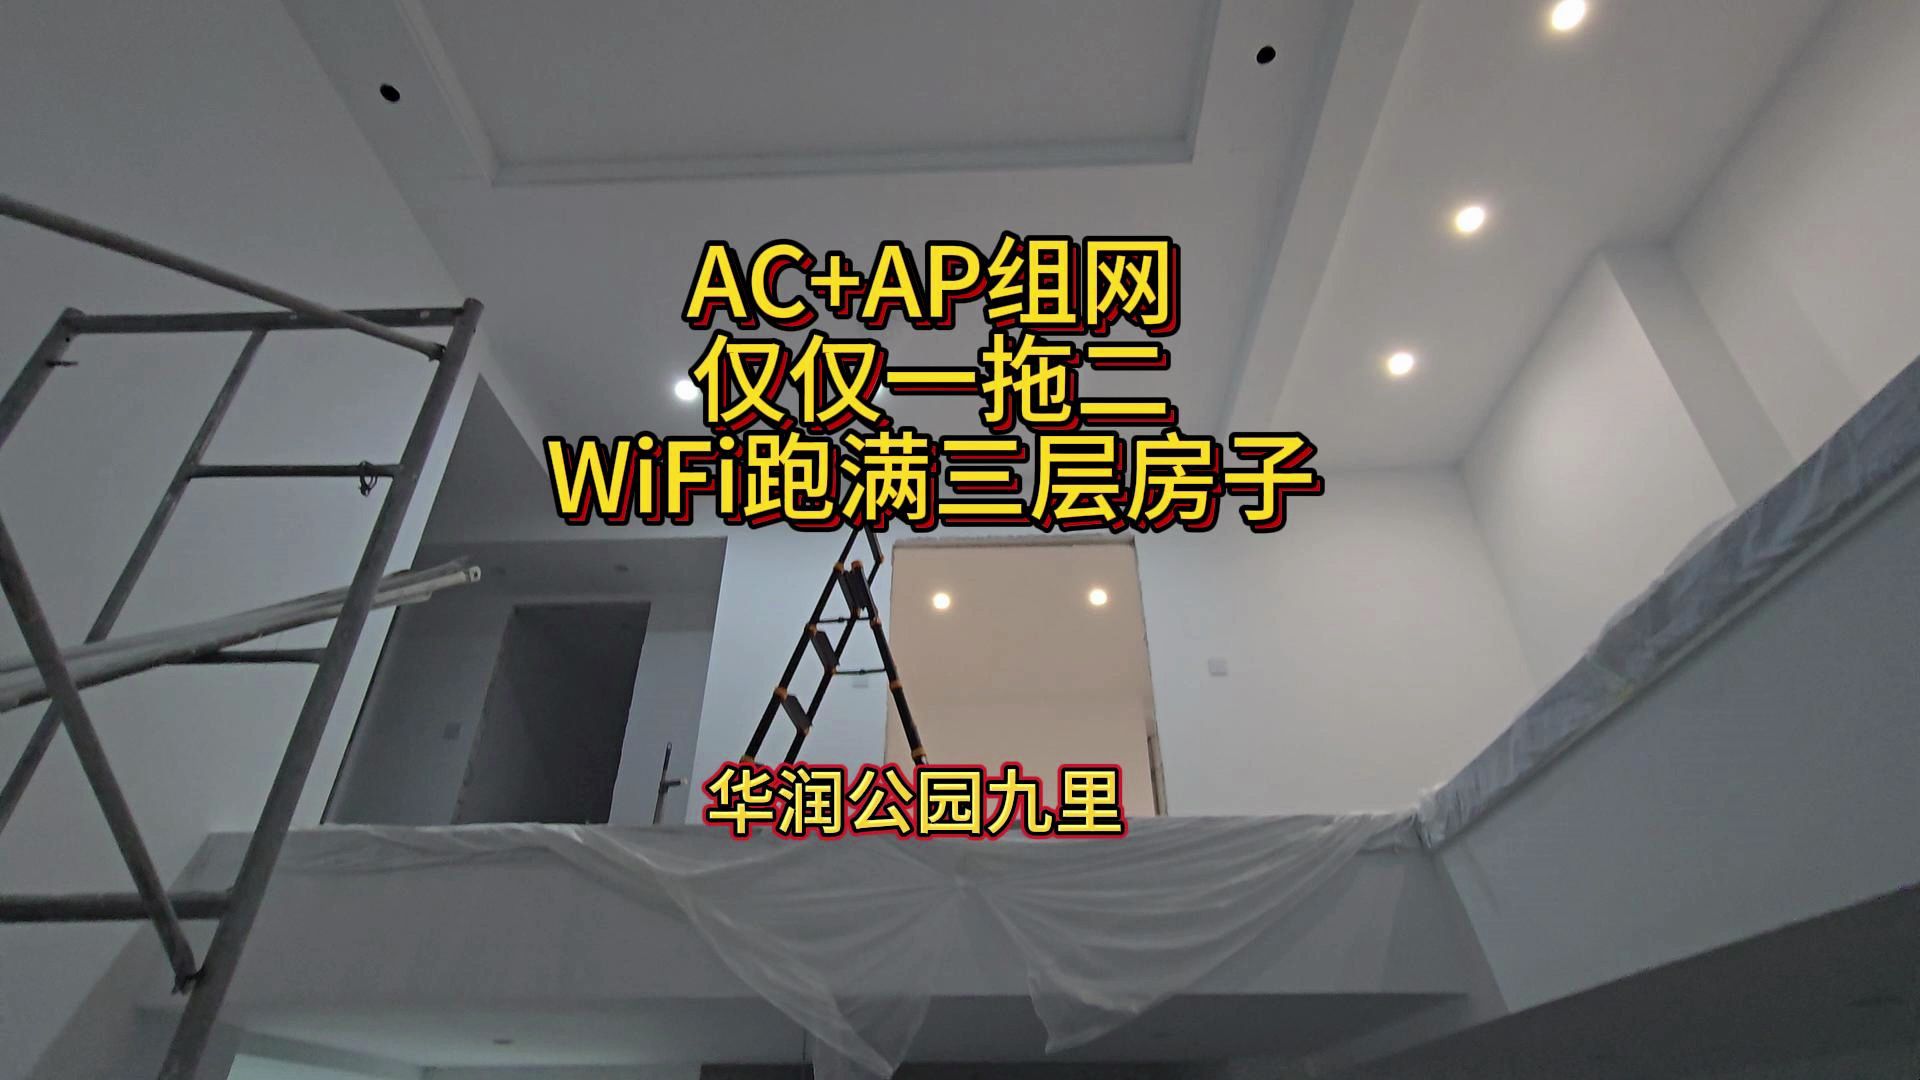 AC+AP组网，仅仅一拖二，WiFi跑满三层房子！